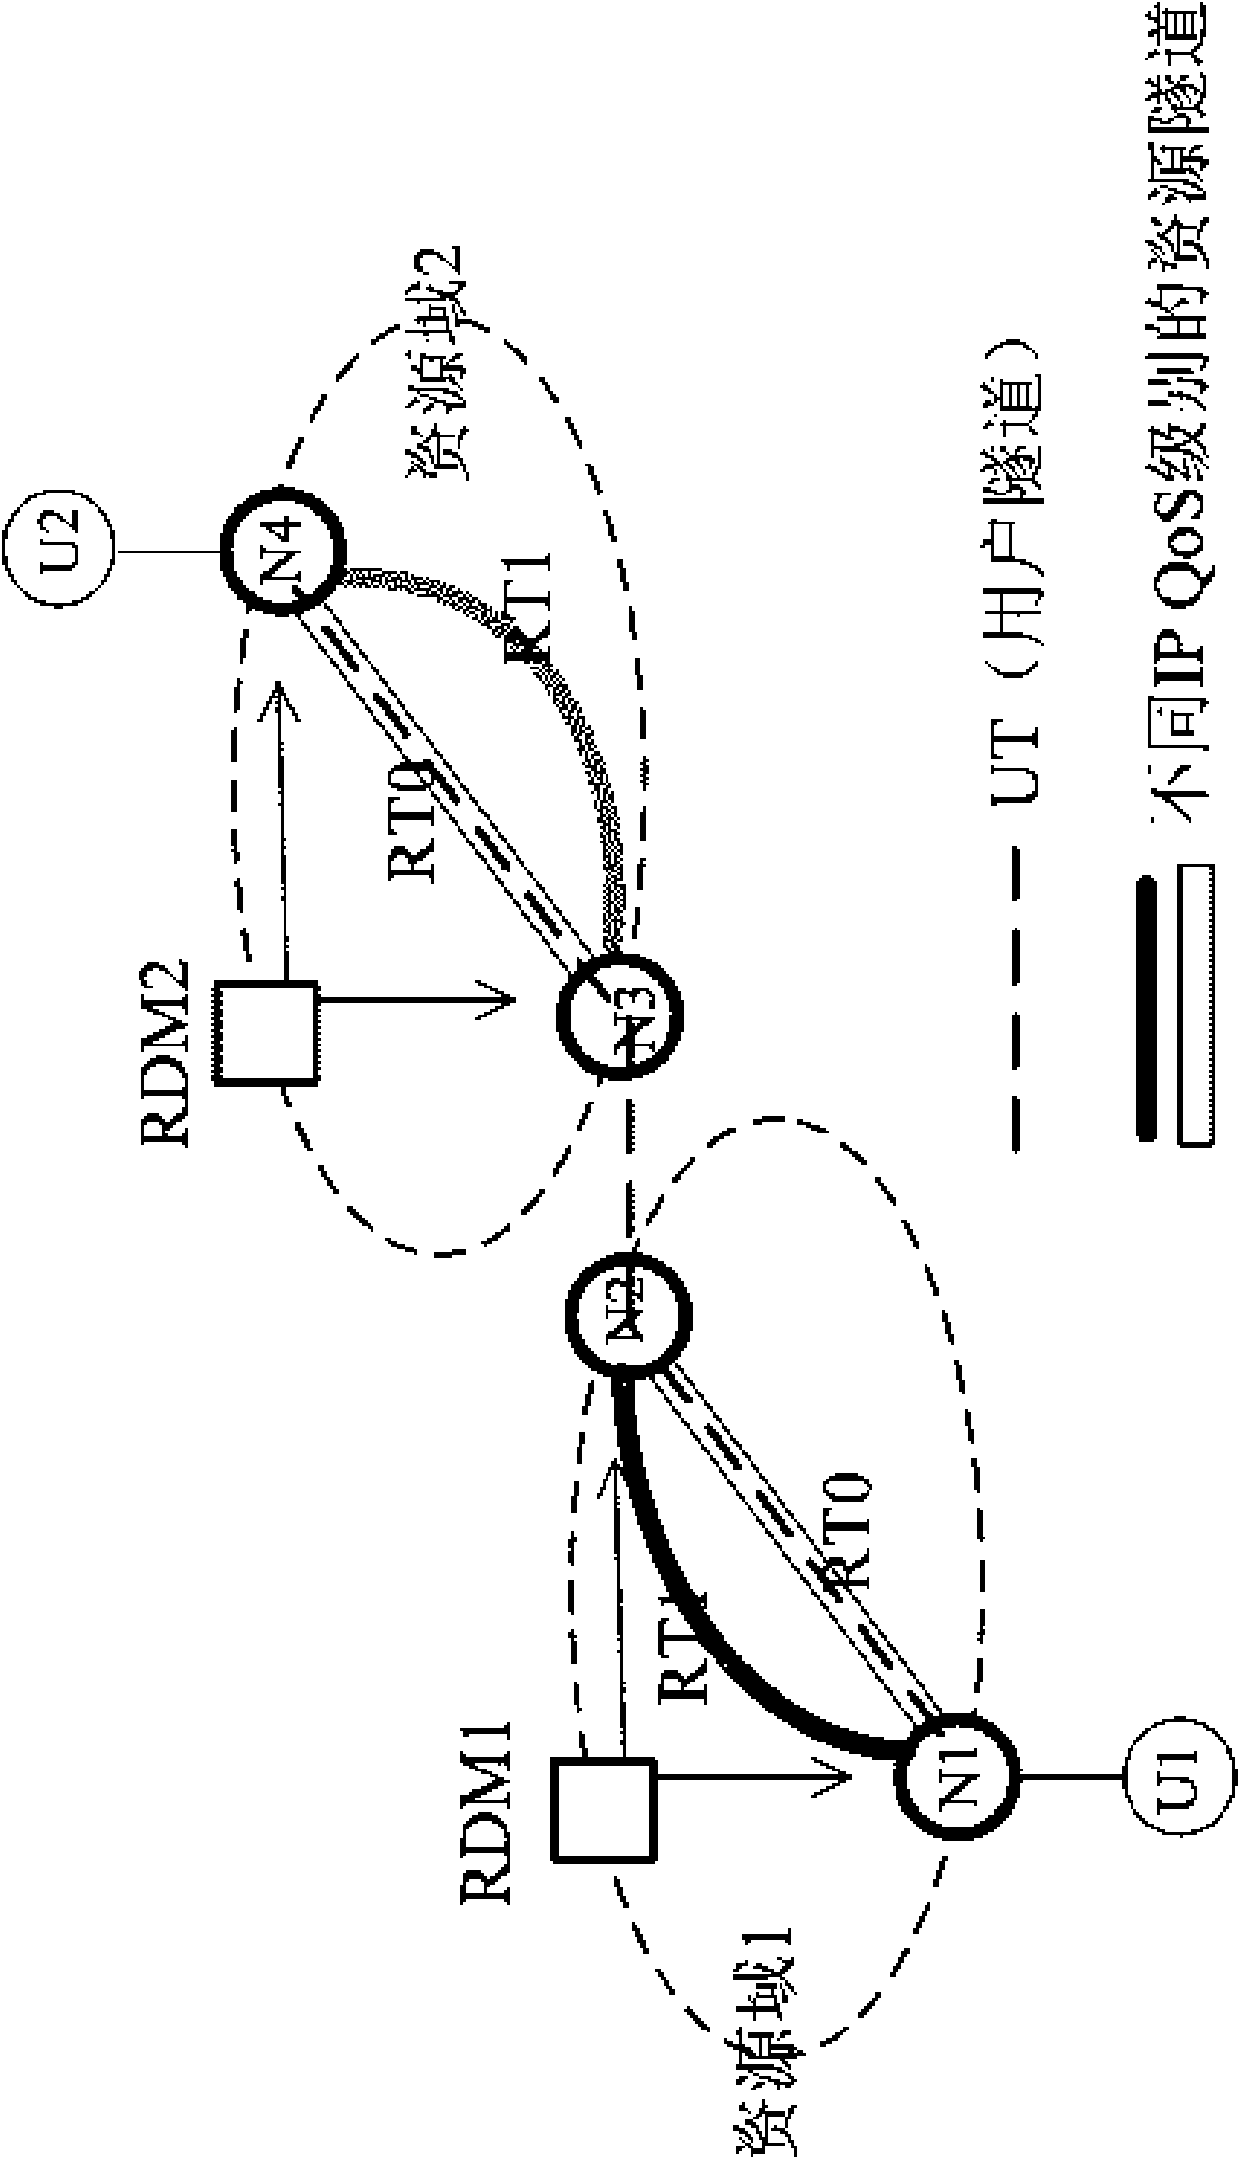 Method for realizing IP telecommunication network based on tunnel